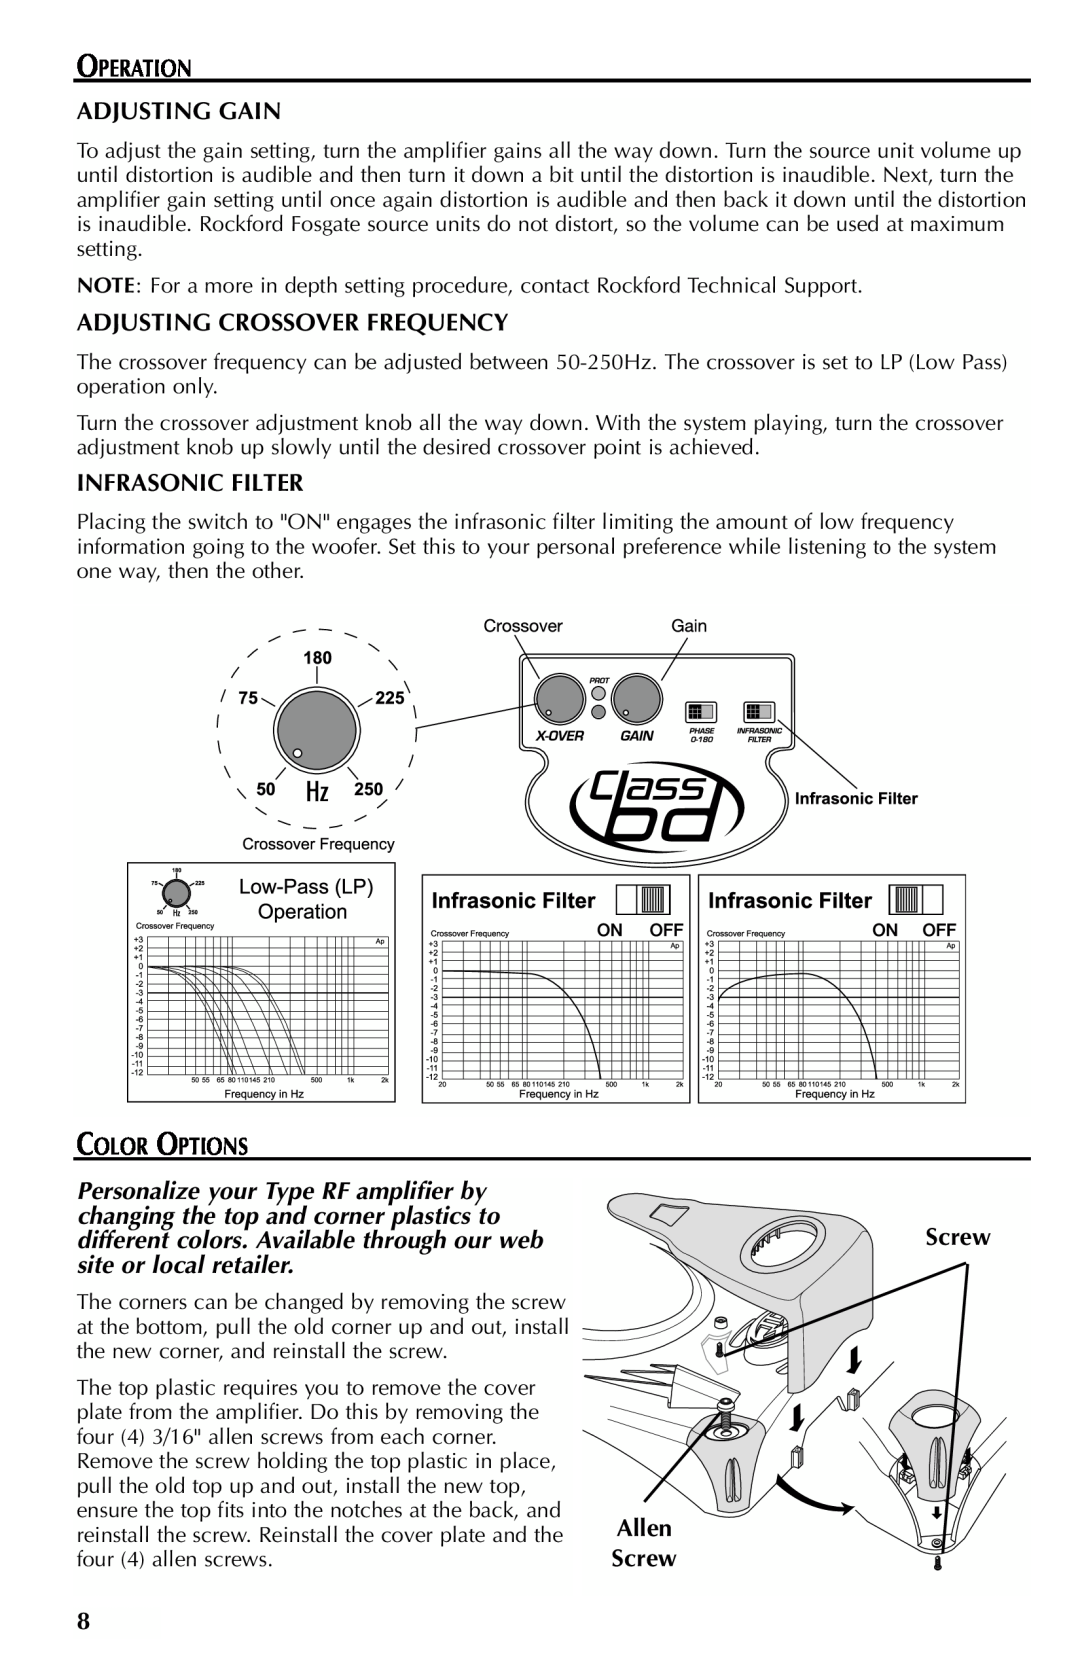 Rockford Fosgate FFX6 manual Operation Adjusting Gain, Adjusting Crossover Frequency, Infrasonic Filter, Color Options 